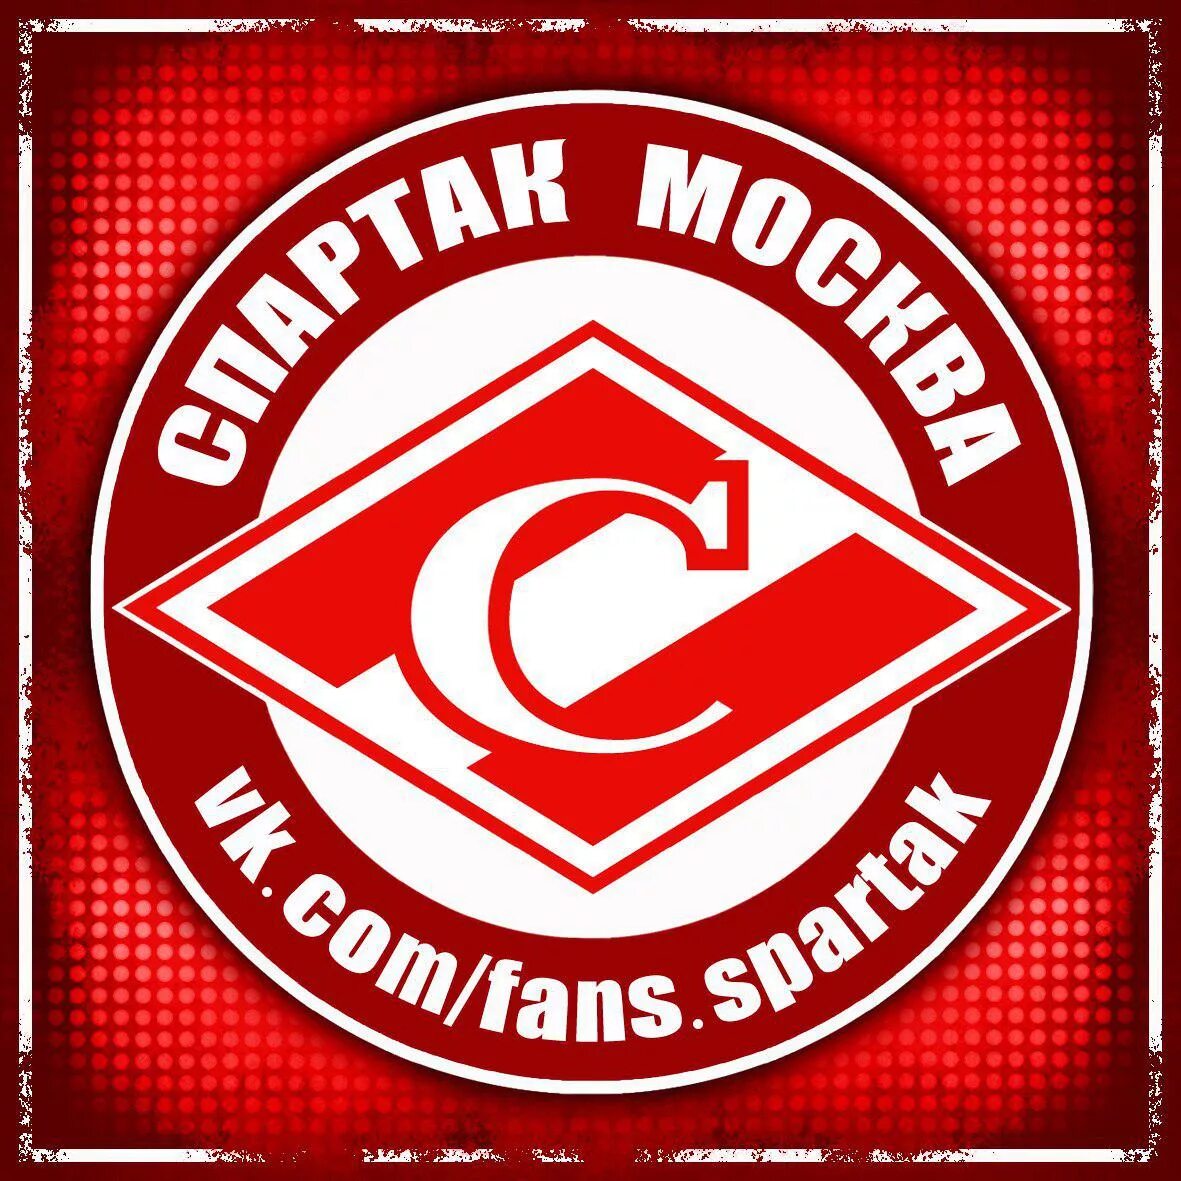 Spartak сайт